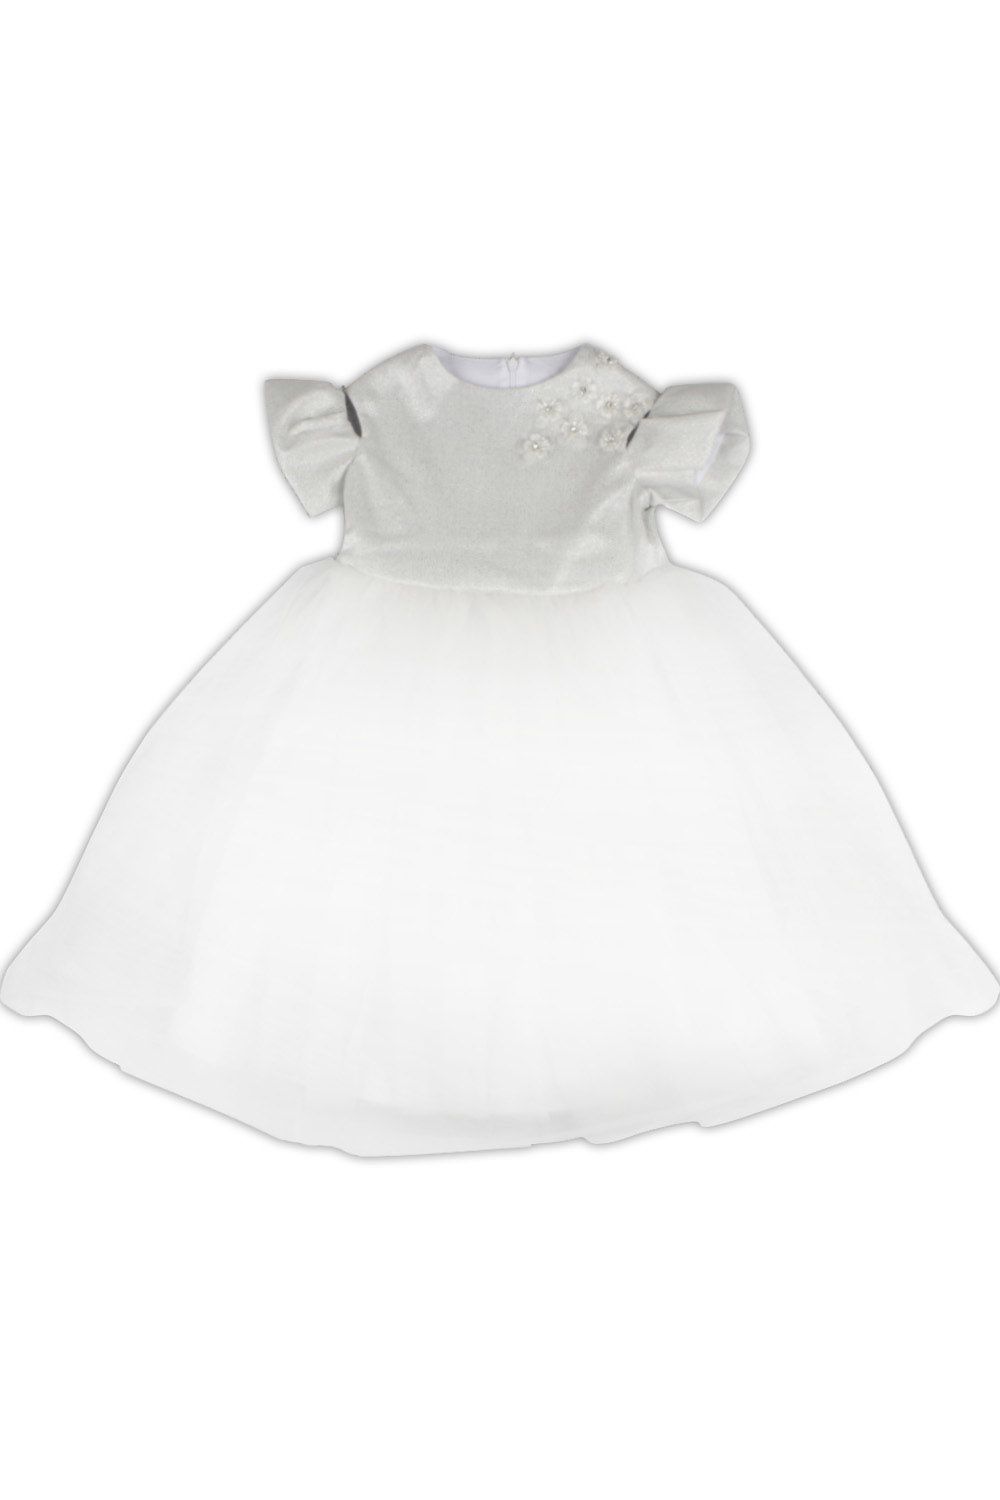 Платье Silver Spoon, размер 92, цвет белый SNFWG-819-23688-200 - фото 1